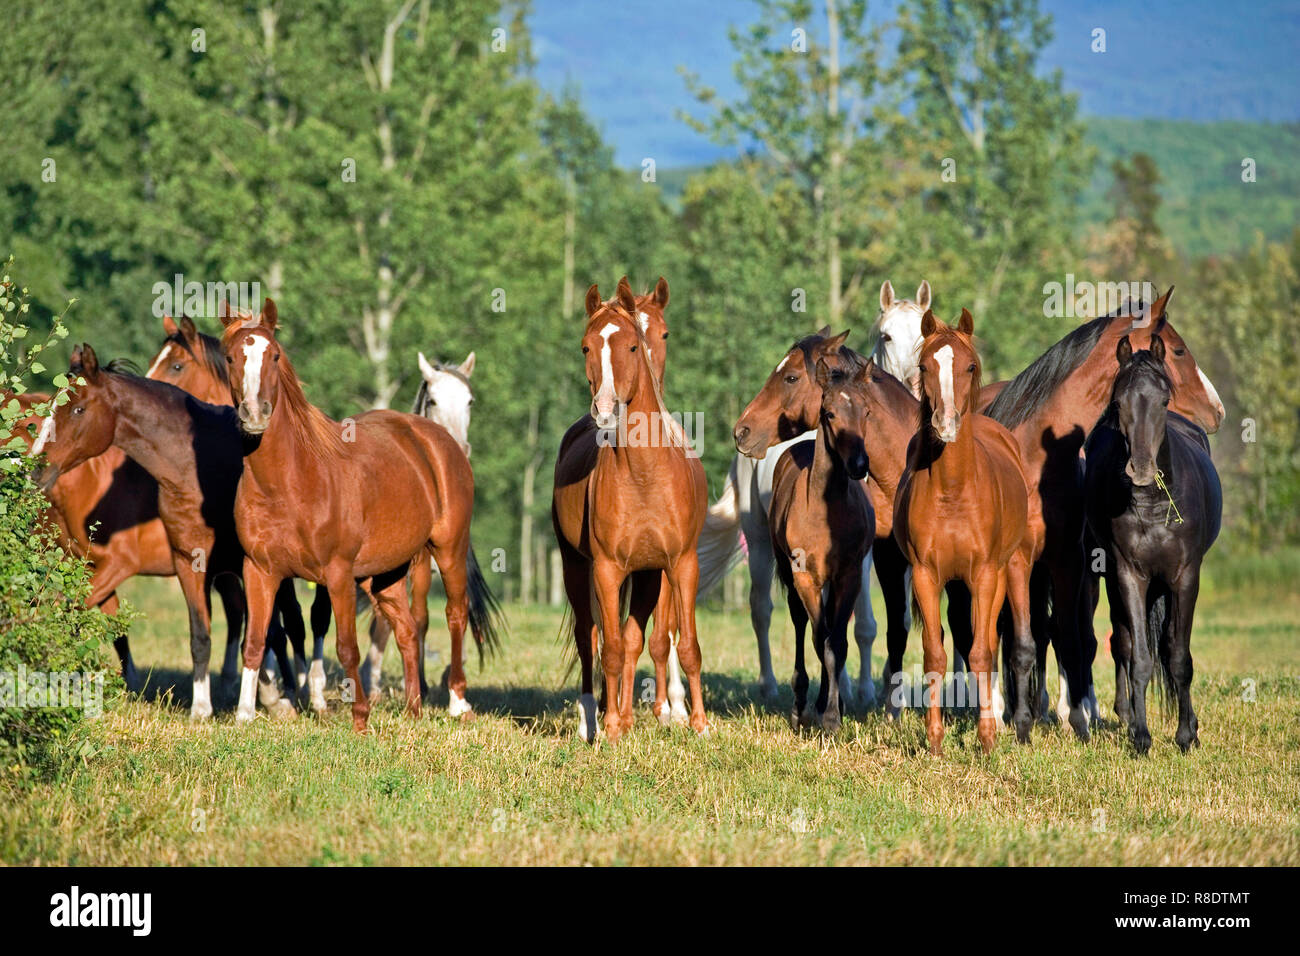 Gruppo di cavalli arabi in piedi insieme in Prato Foto stock - Alamy